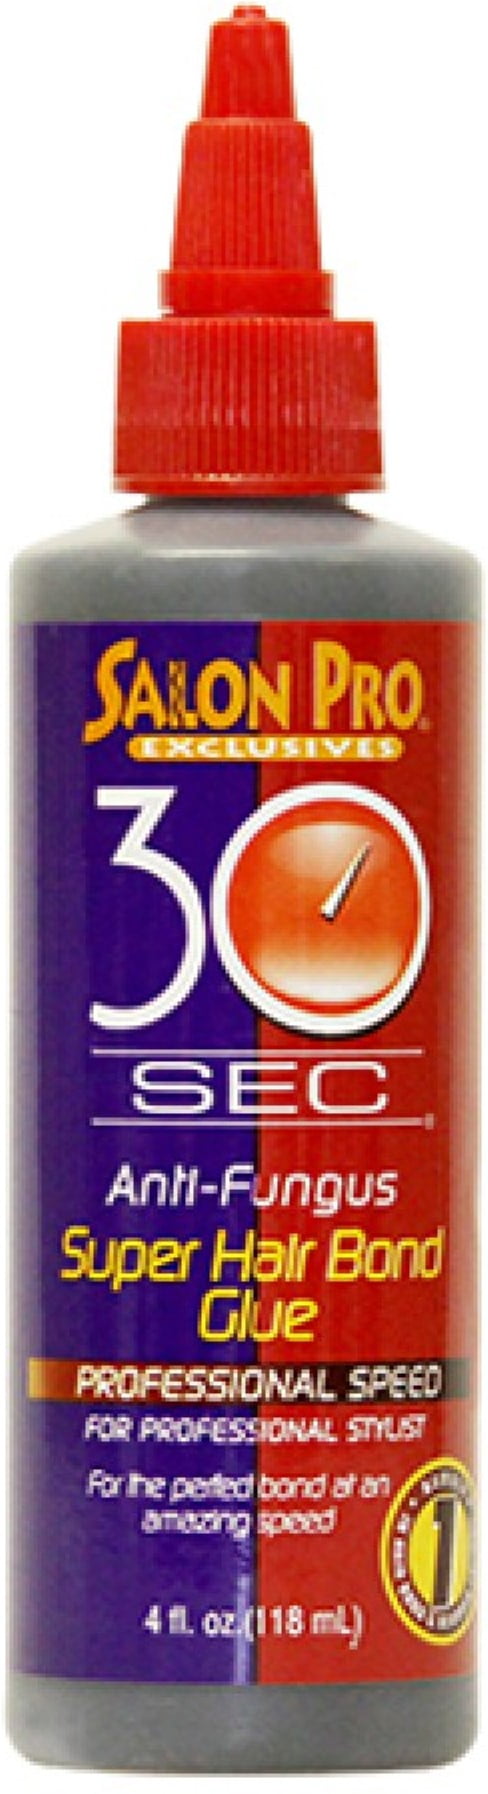 Salon Pro Super Hair Bonding Glue 4 oz 